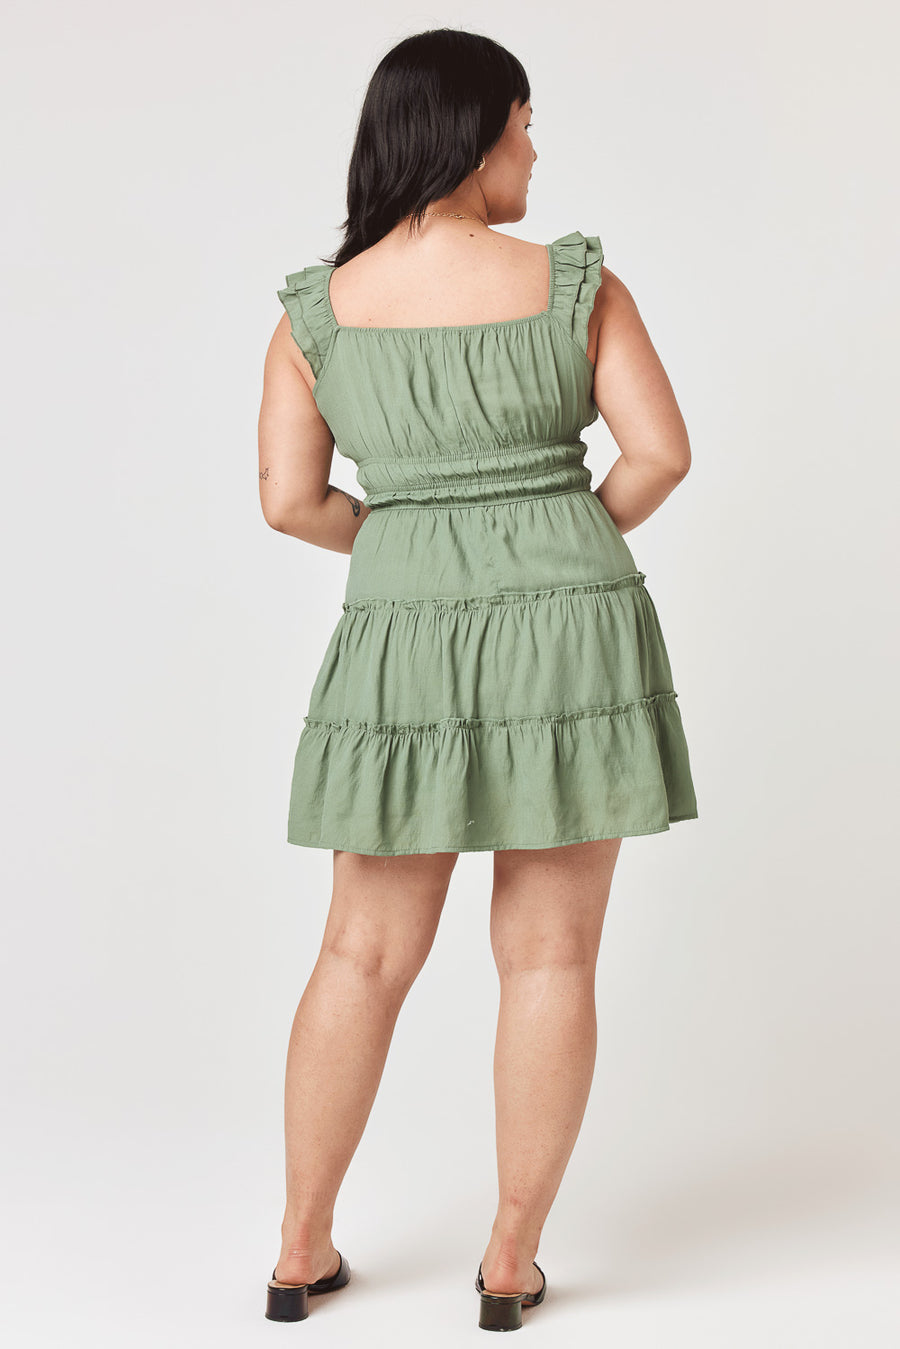 Olive Emma Top Tiered Dress - Trixxi Clothing